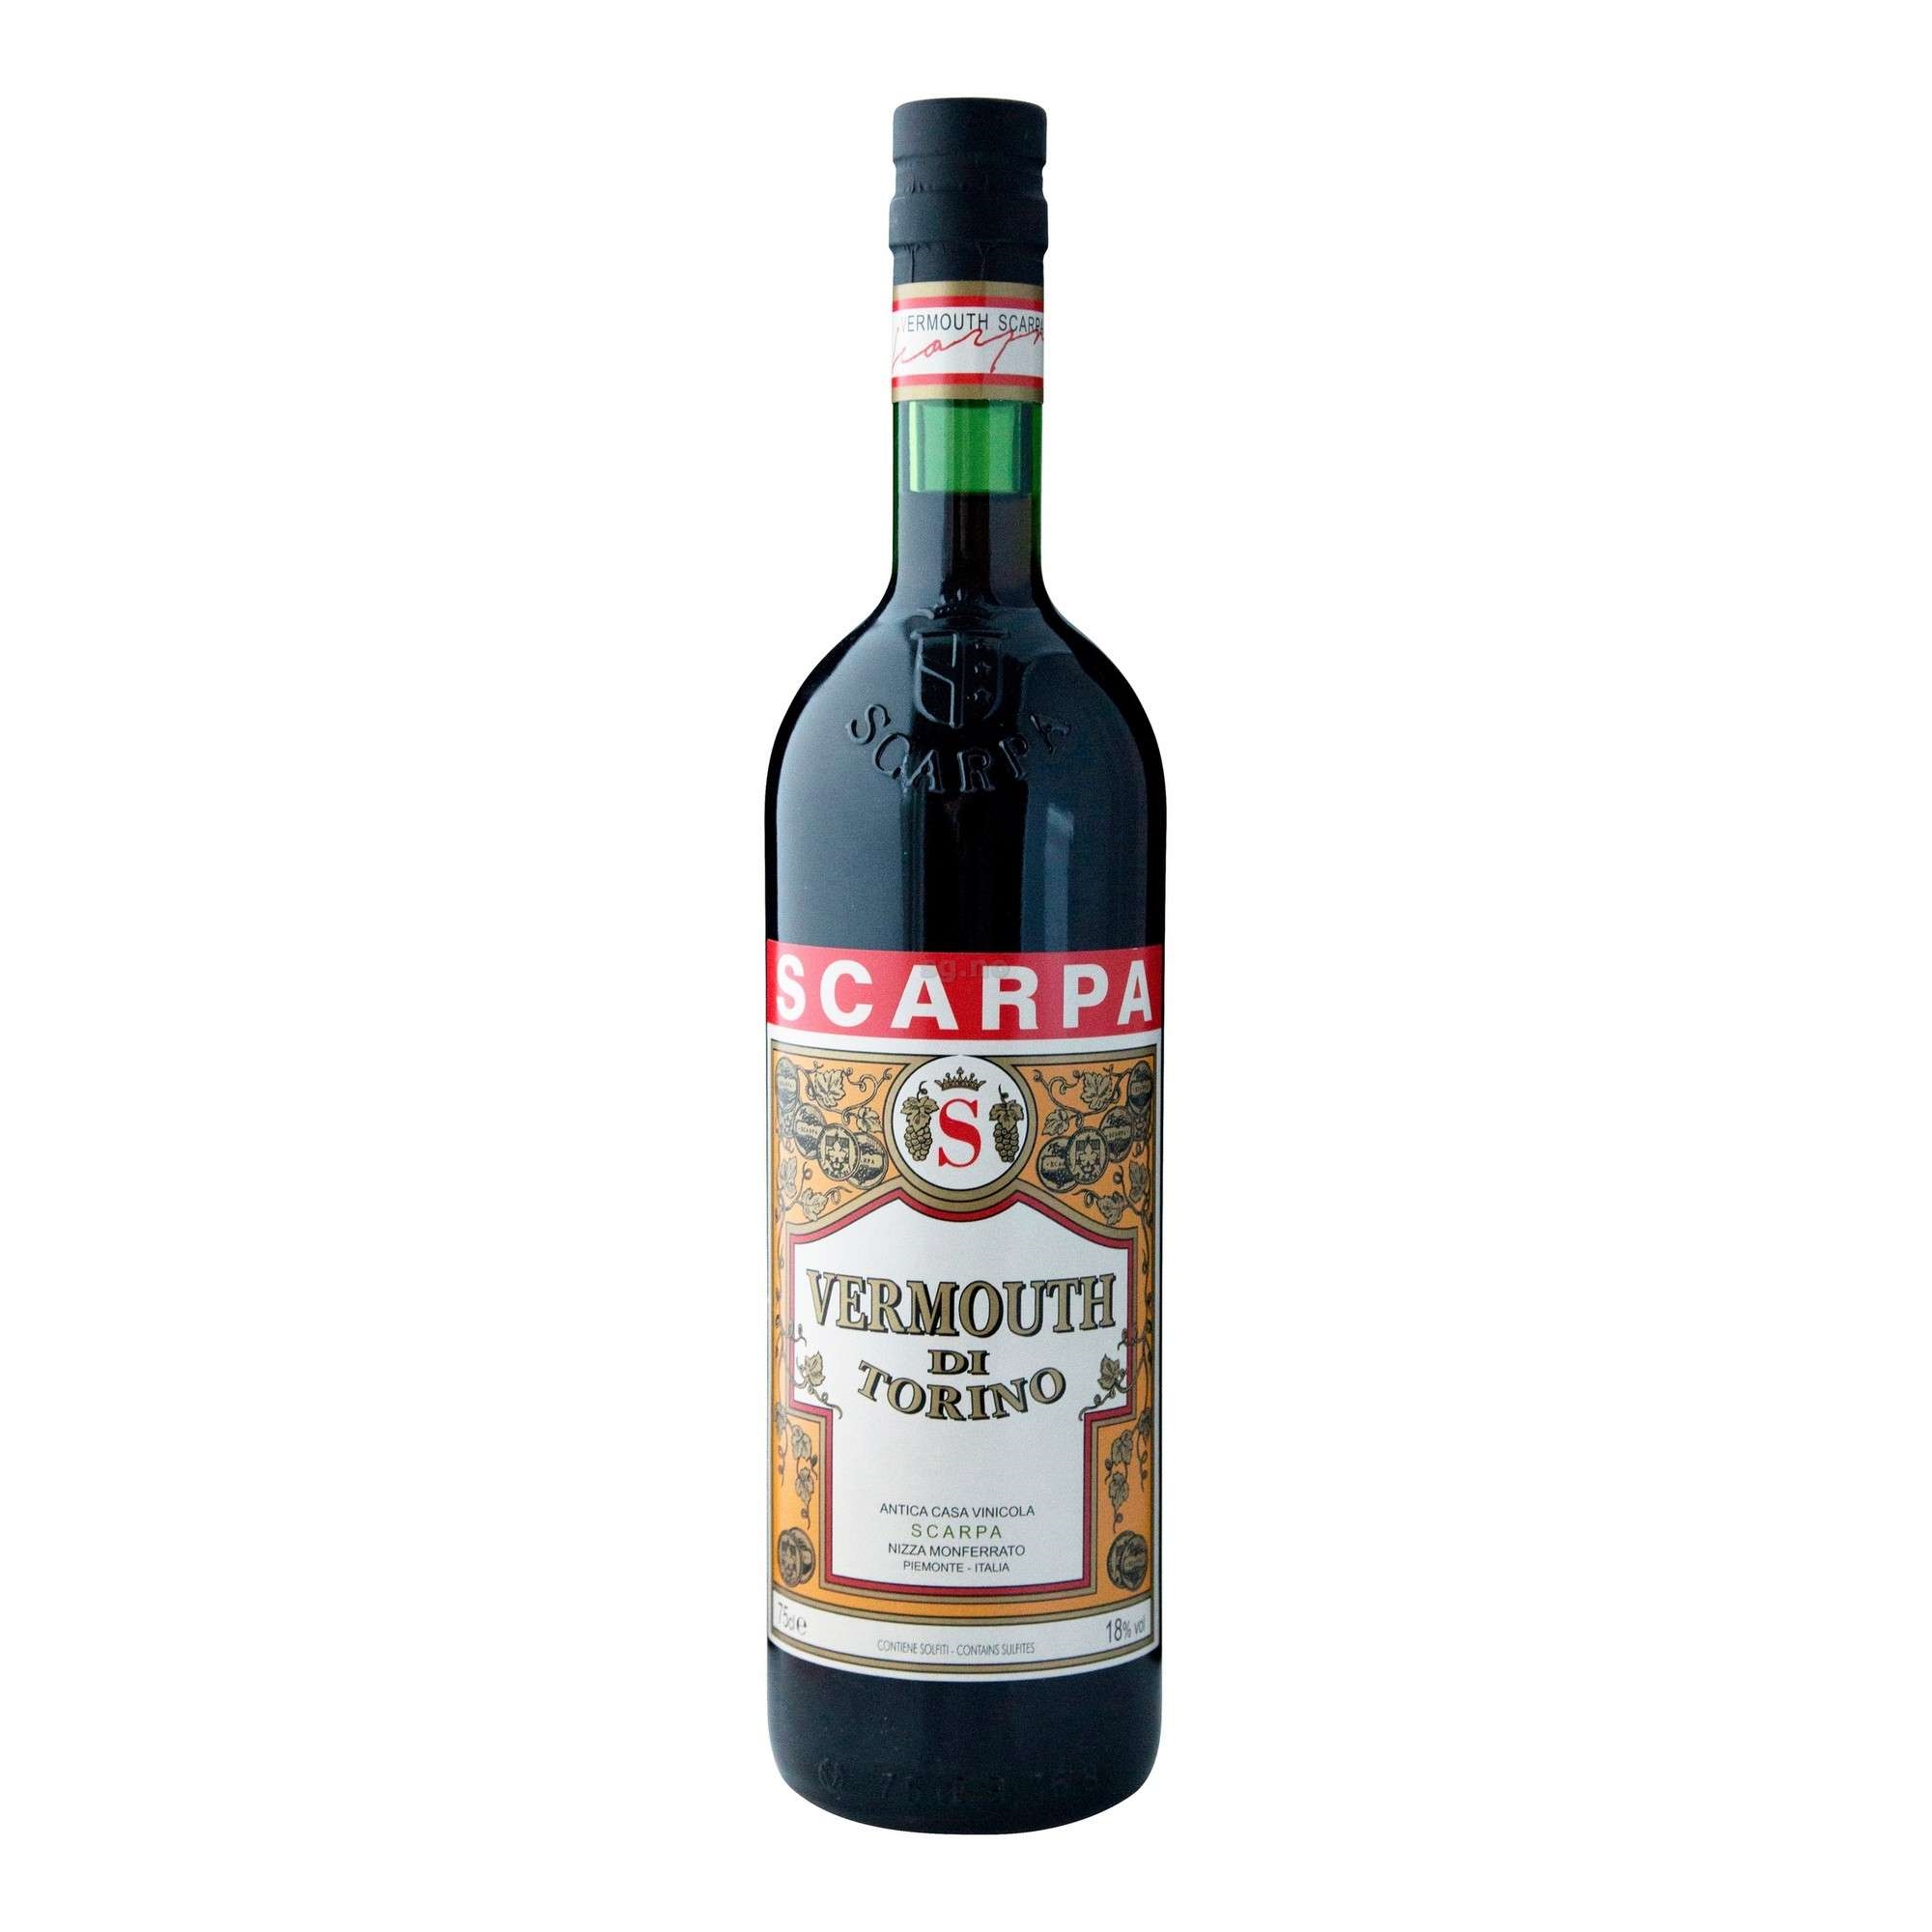 Scarpa vermouth di torino  18%  75cl